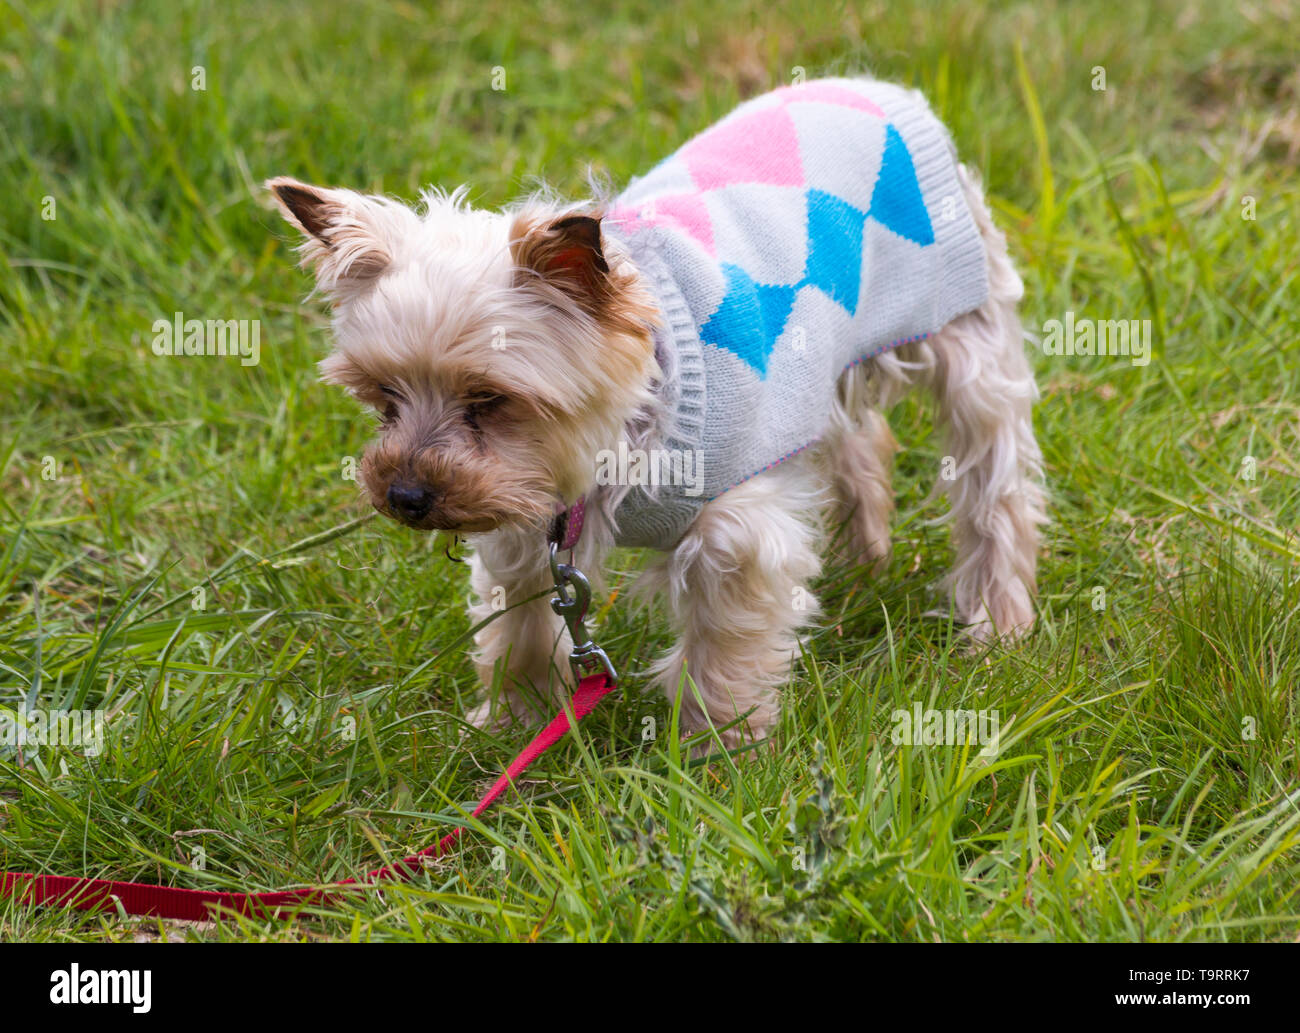 Yorkie dog, Yorkshire Terrier, dressed 